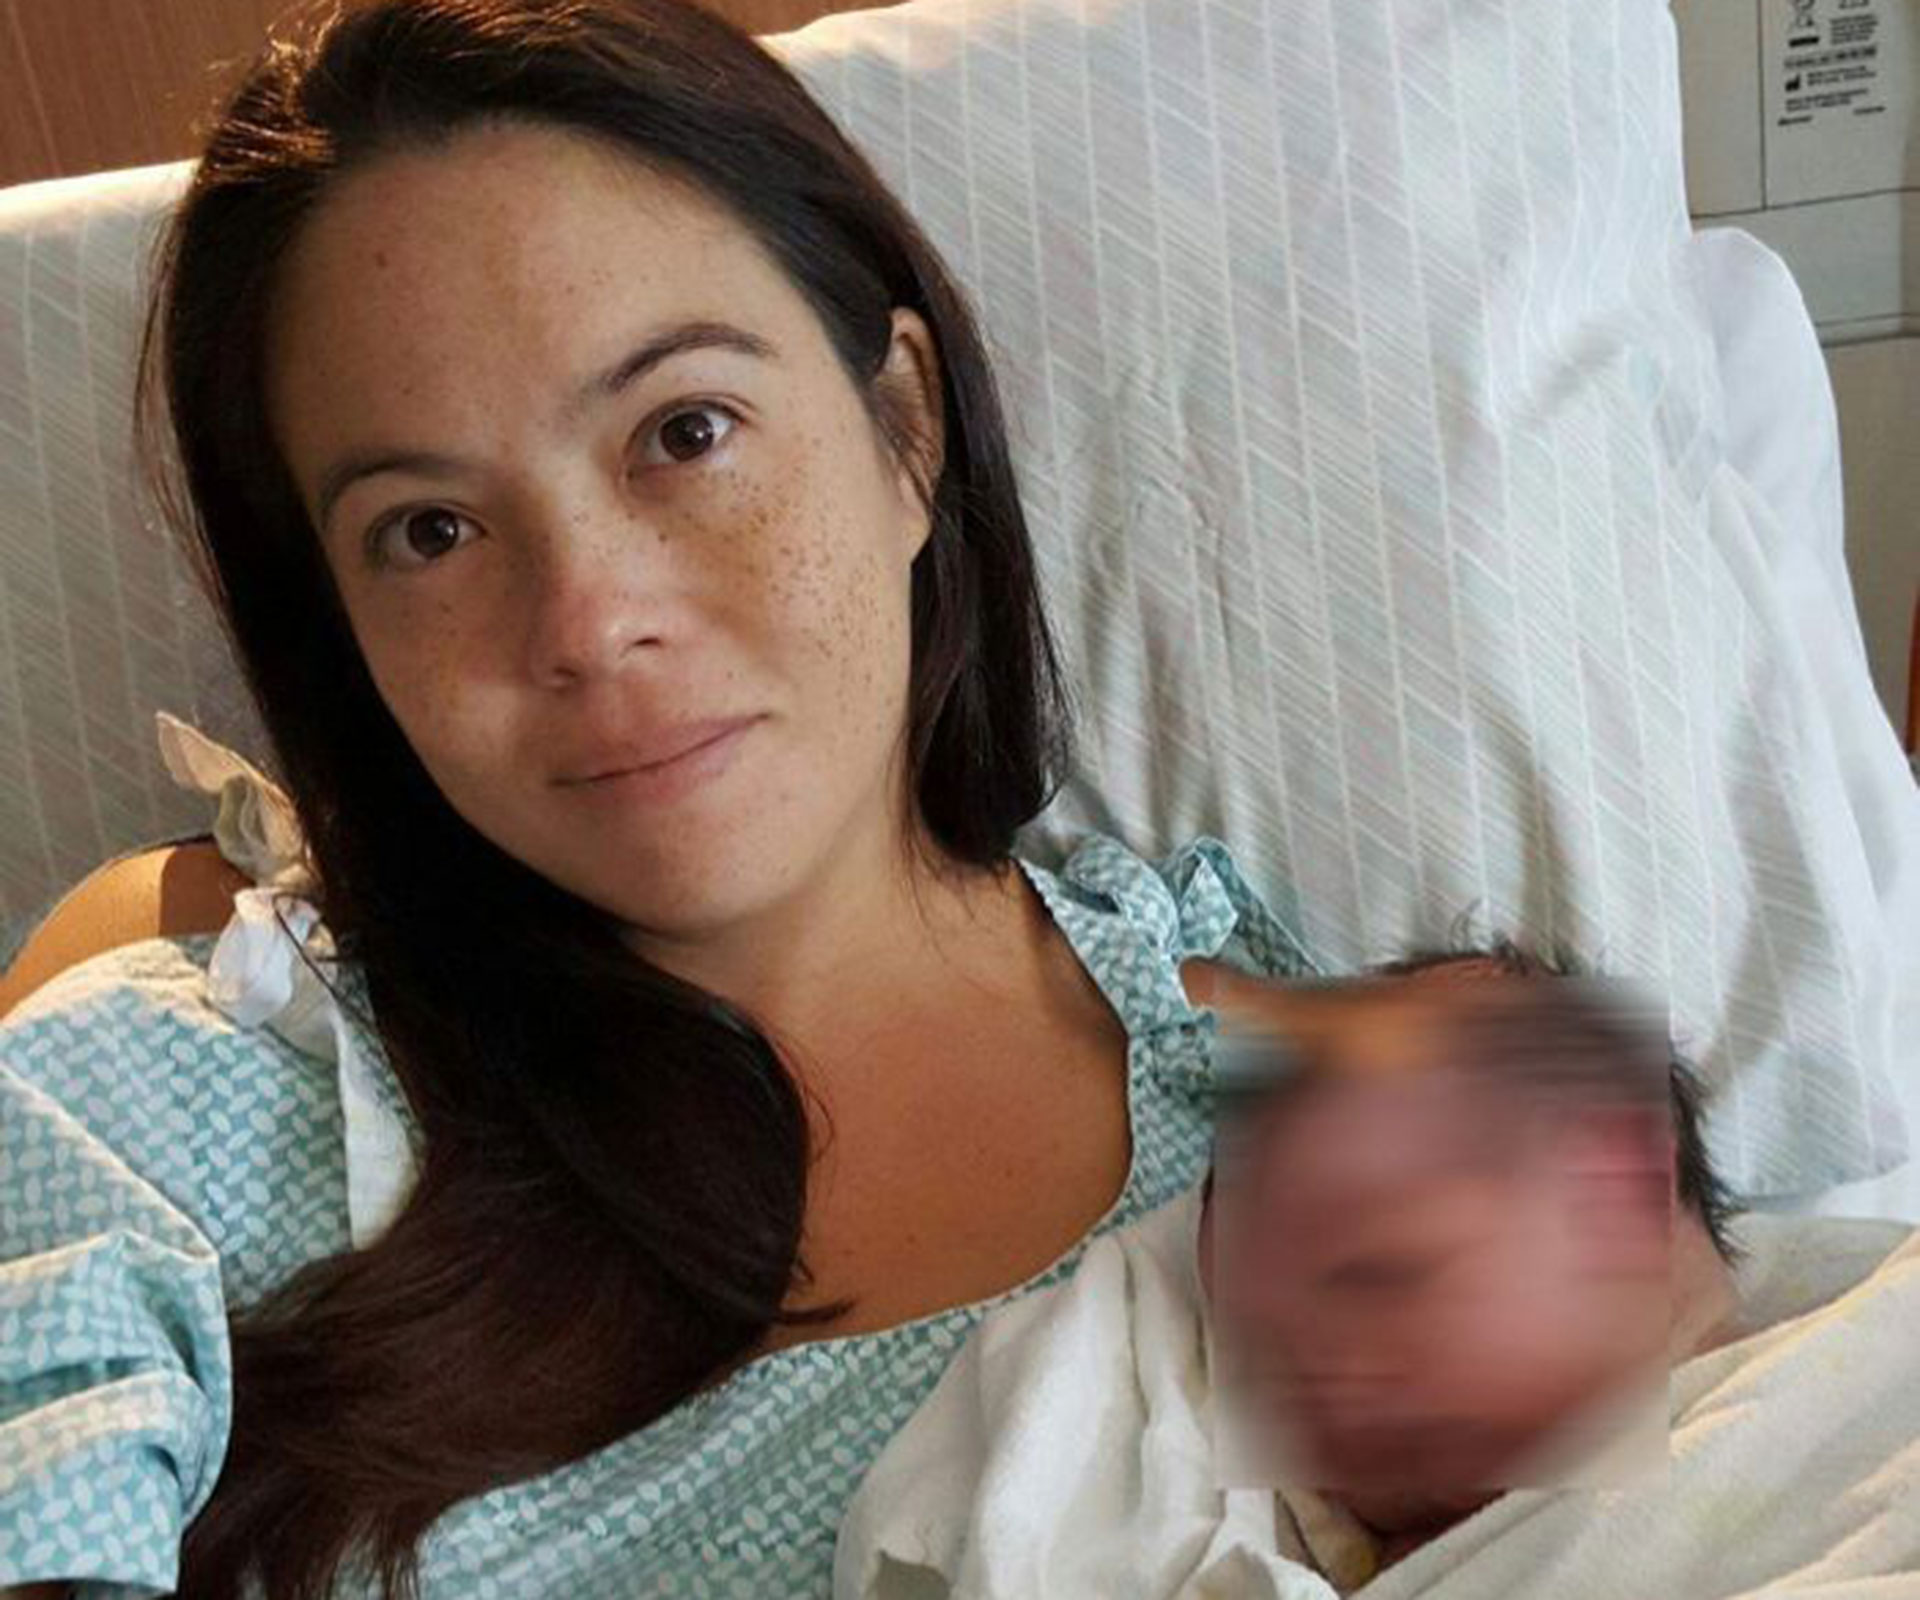 Newborn left homeless after surrogacy feud